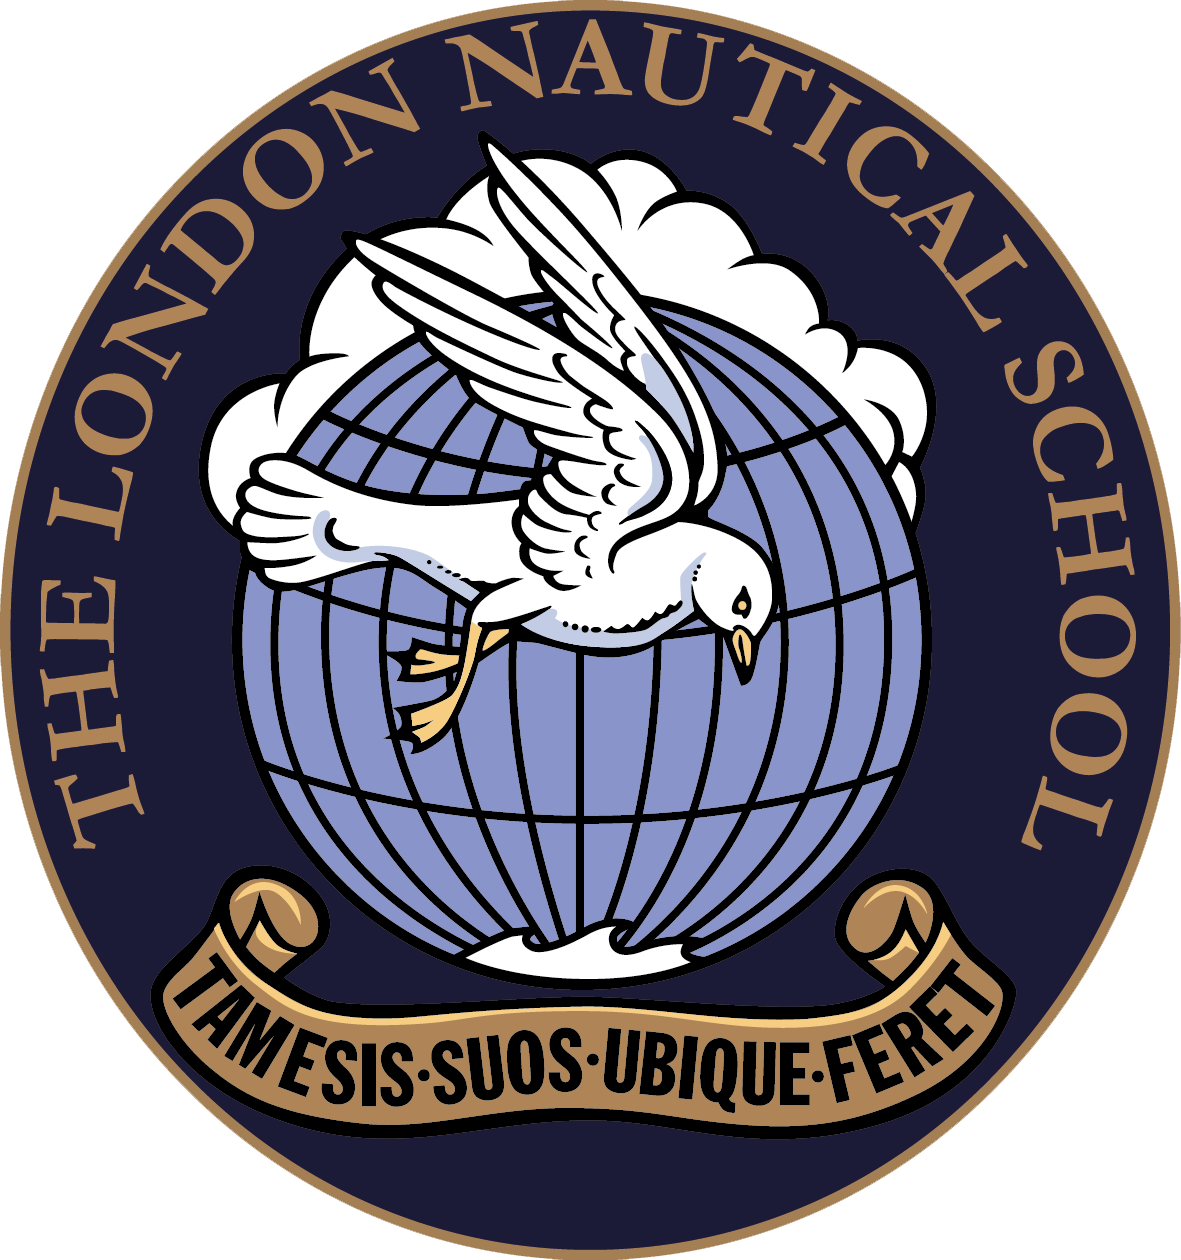 The London Nautical School校徽